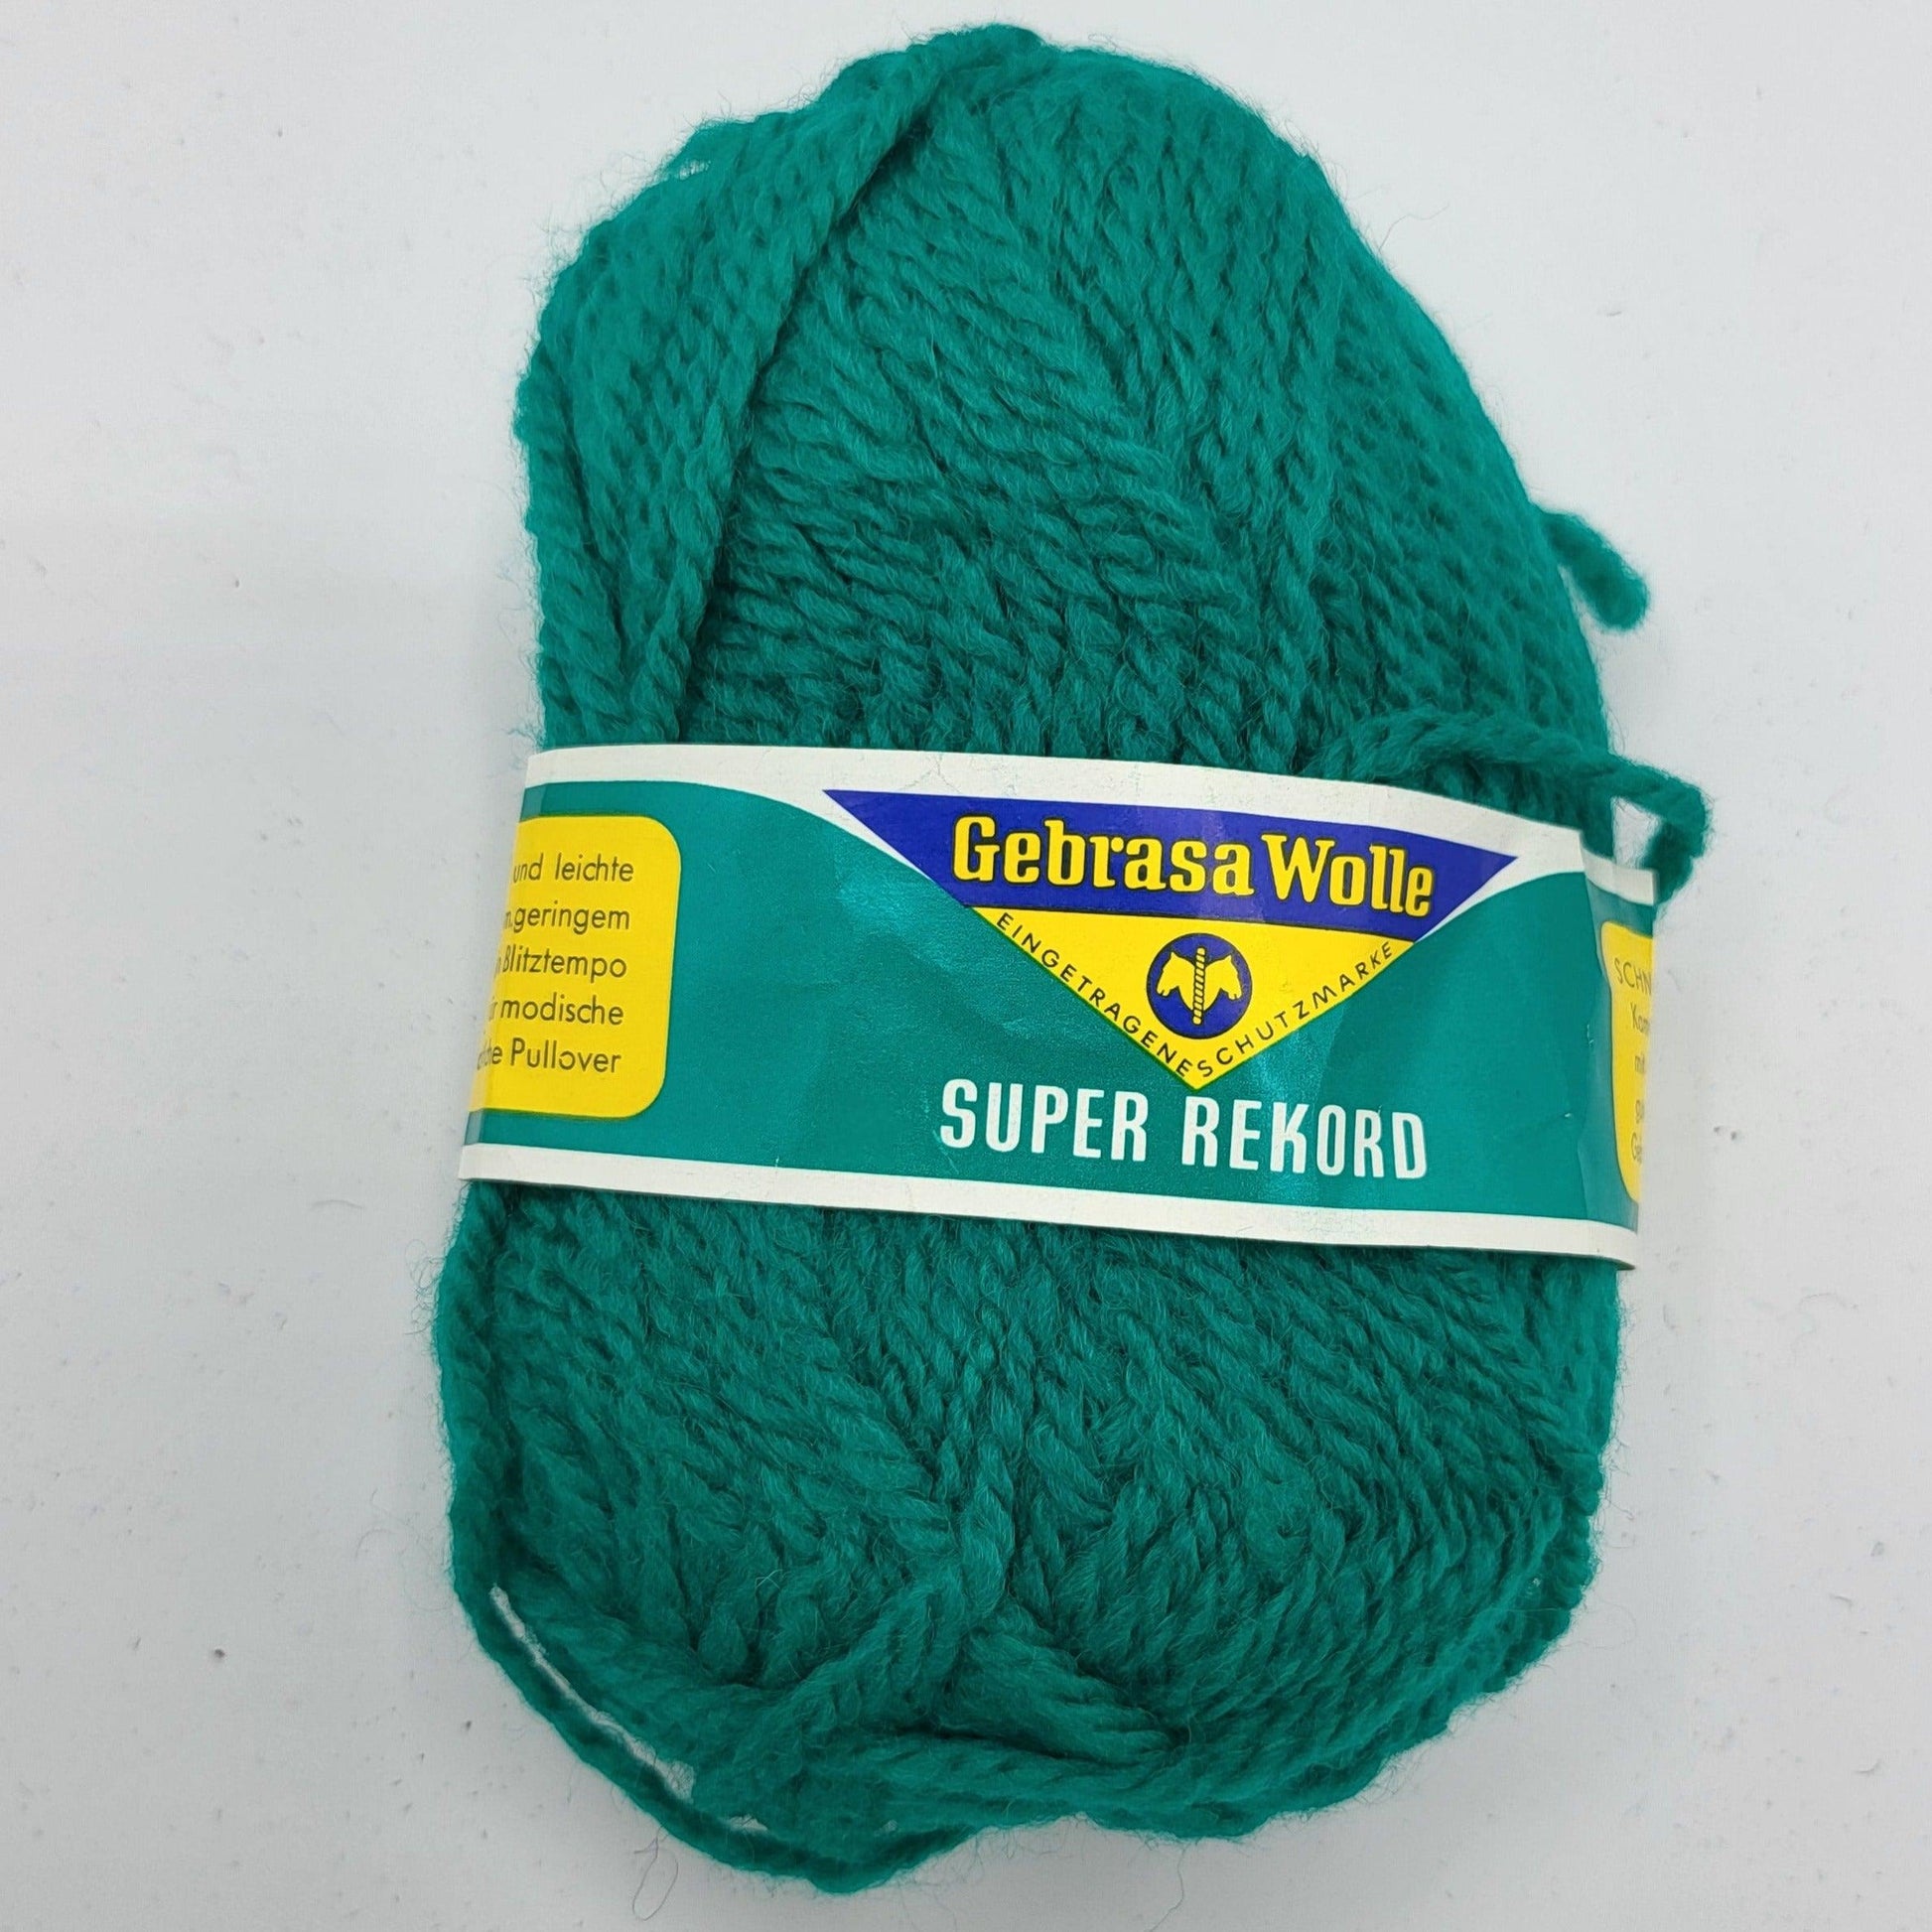 Gebrasa SuperRekord Wolle Dralon 50g Kammgarn - EkoDeko.de